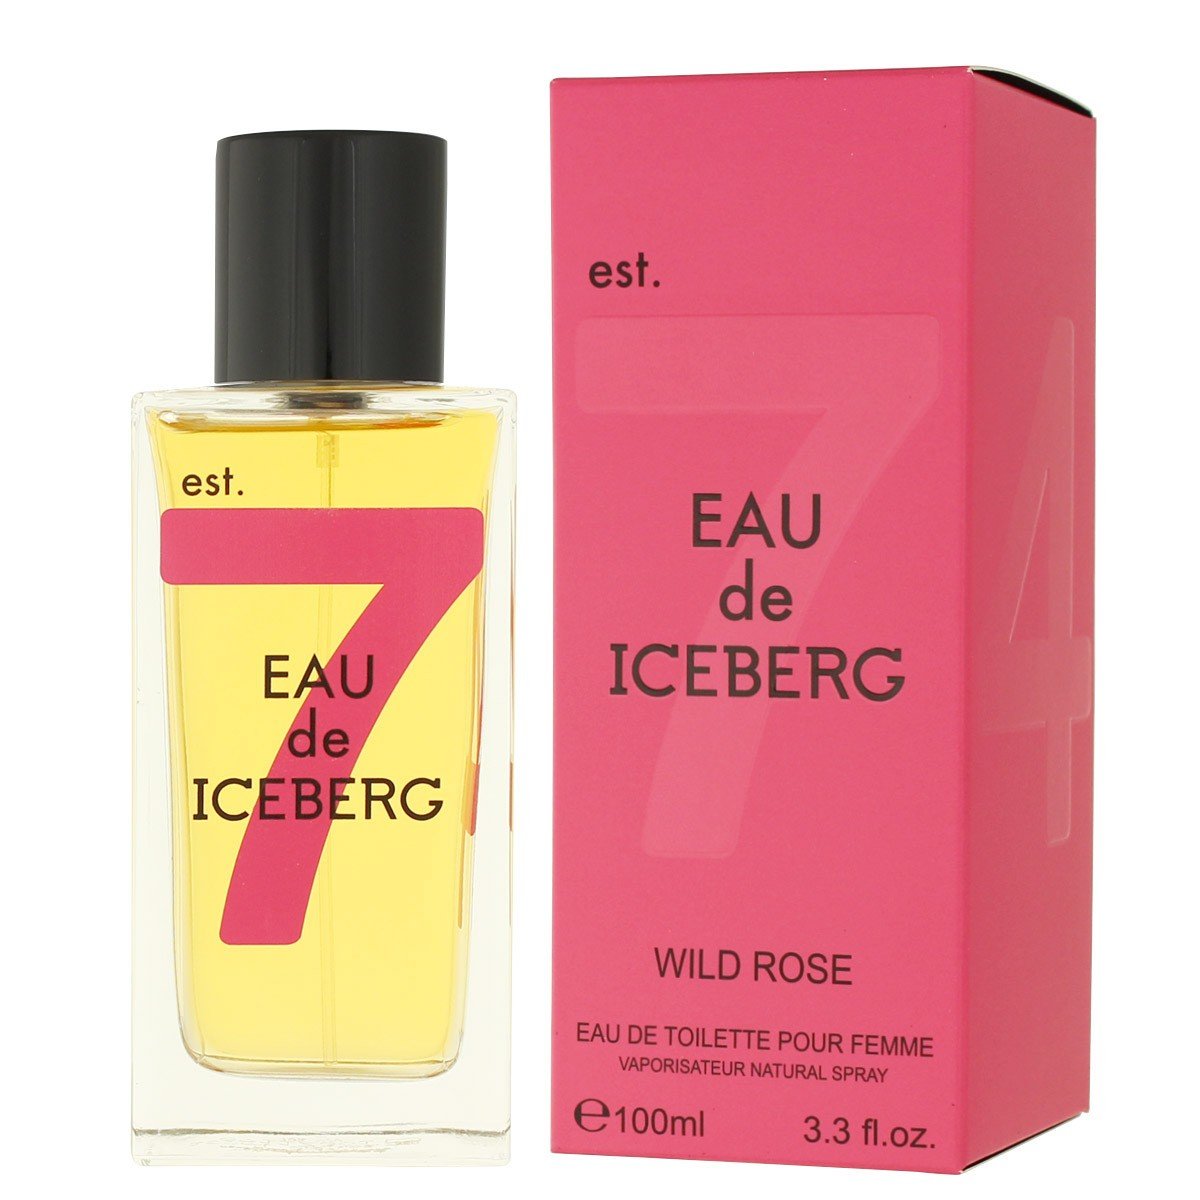 Planet Perfume - Amazing Deals On Fragrances Iceberg